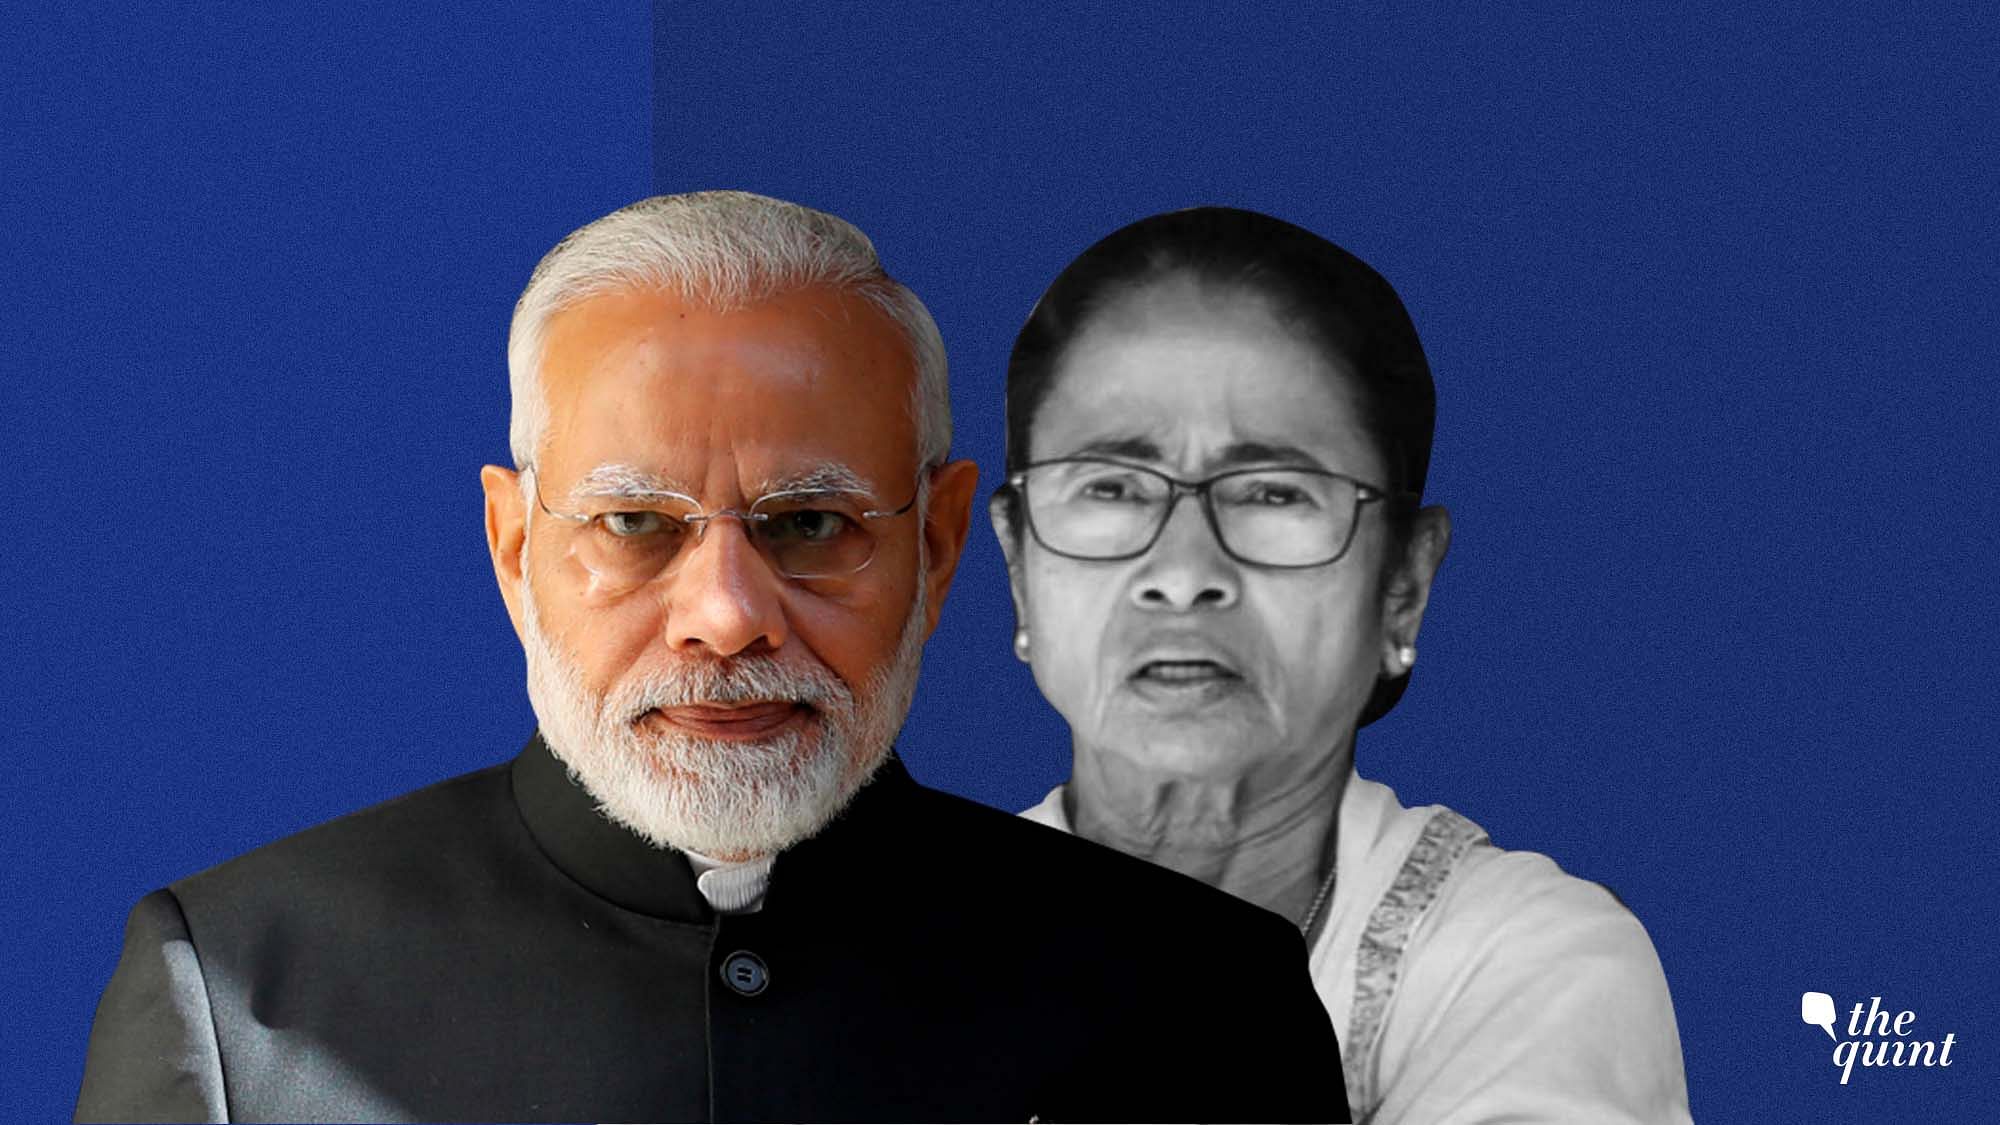 Image of Mamata and Modi used for representational purposes.